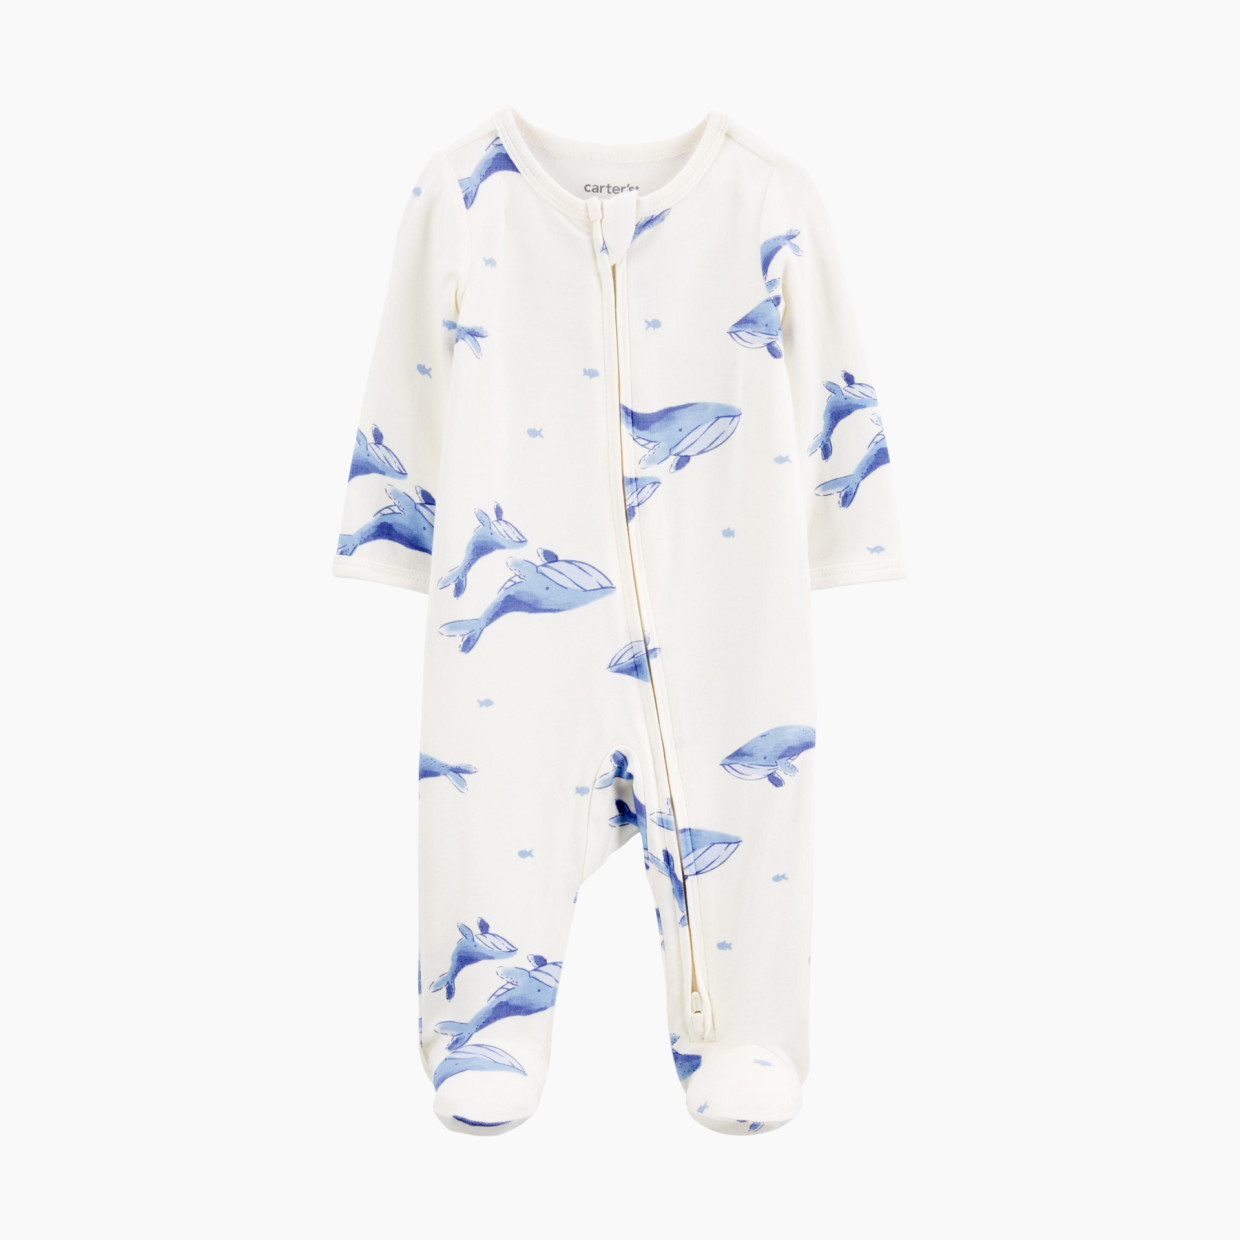 Carter's 2-Way Zip Lenzing Ecovera Sleep & Play Pajamas - Ivory/Blue, Nb.